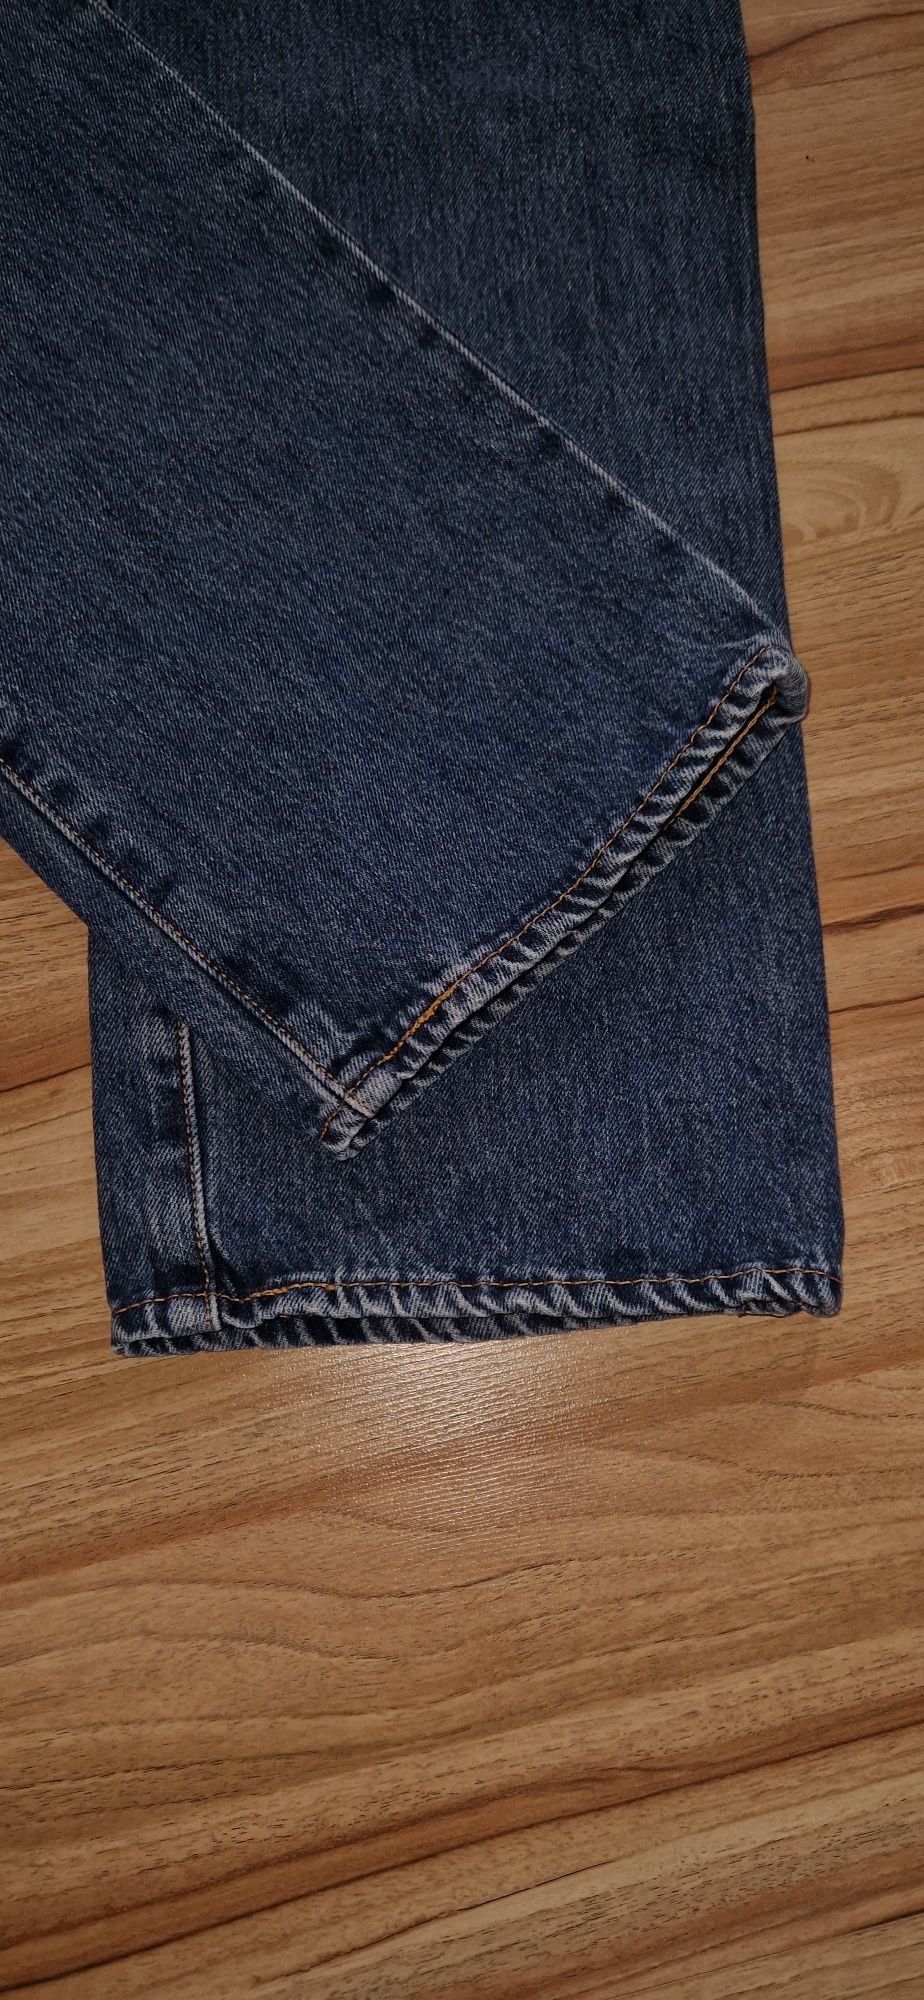 LEVIS 501 36/30 spodnie jeansy męskie